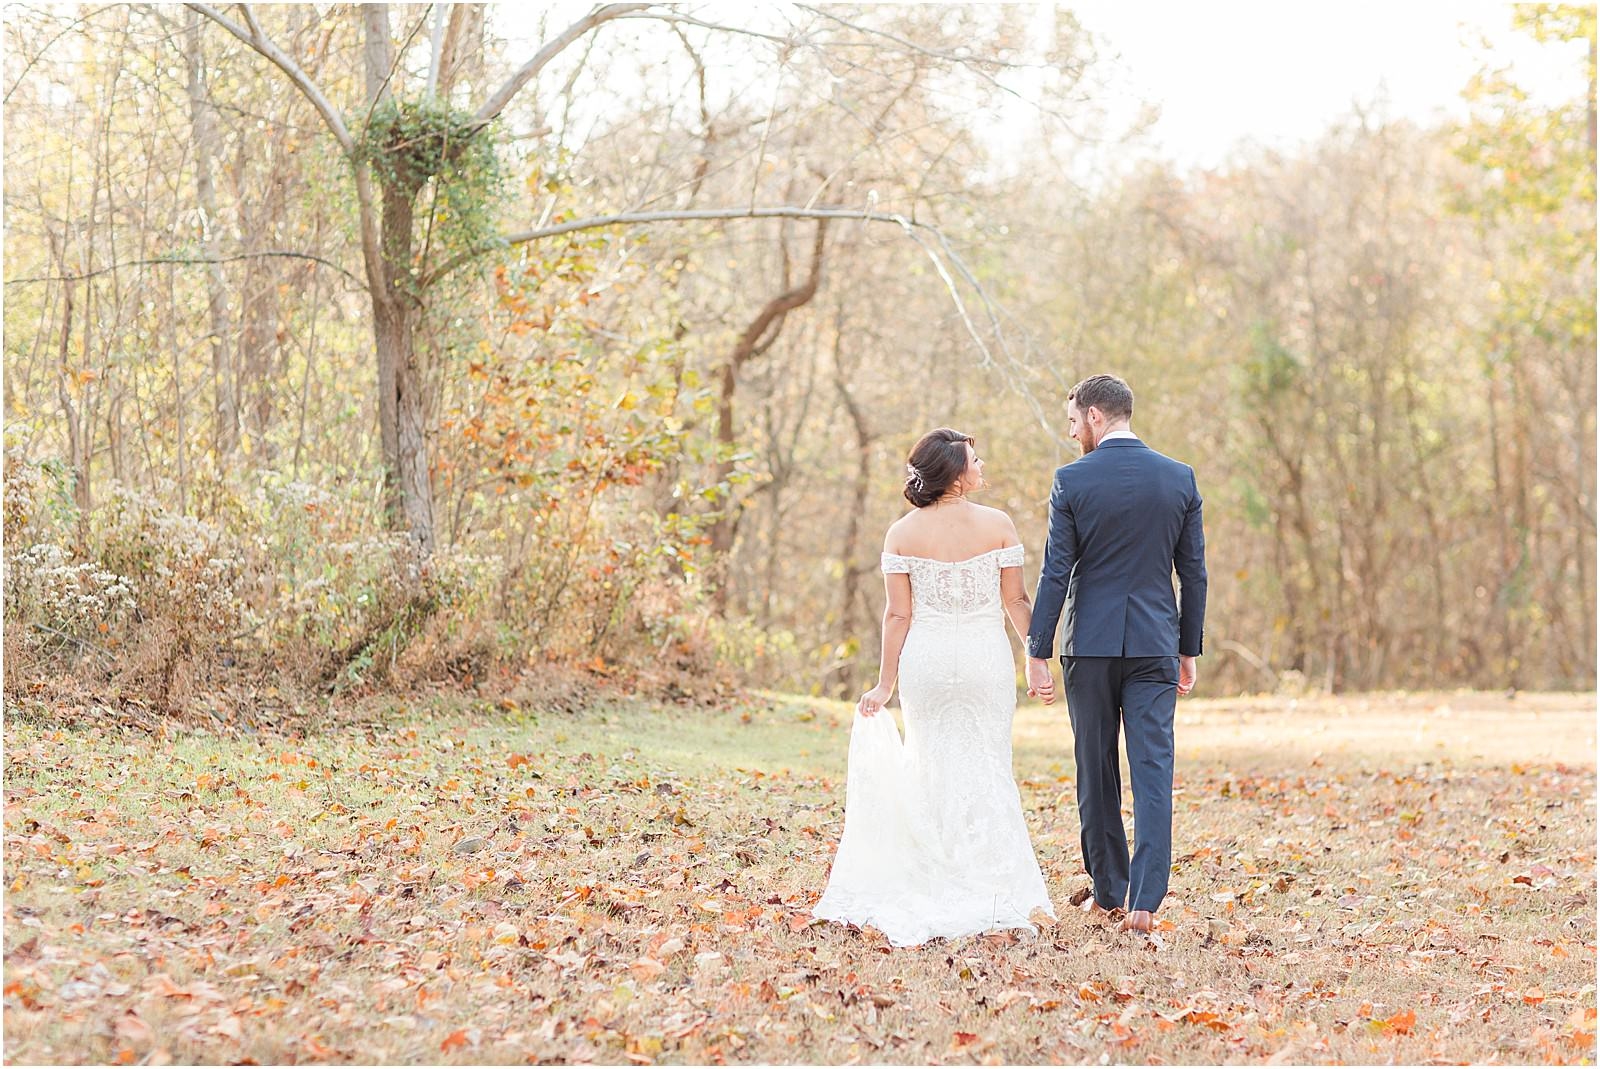 Walker and Alyssa's intimate fall wedding in Southern Indiana. | Wedding Photography | The Corner House Wedding | Southern Indiana Wedding | #fallwedding #intimatewedding | 040.jpg